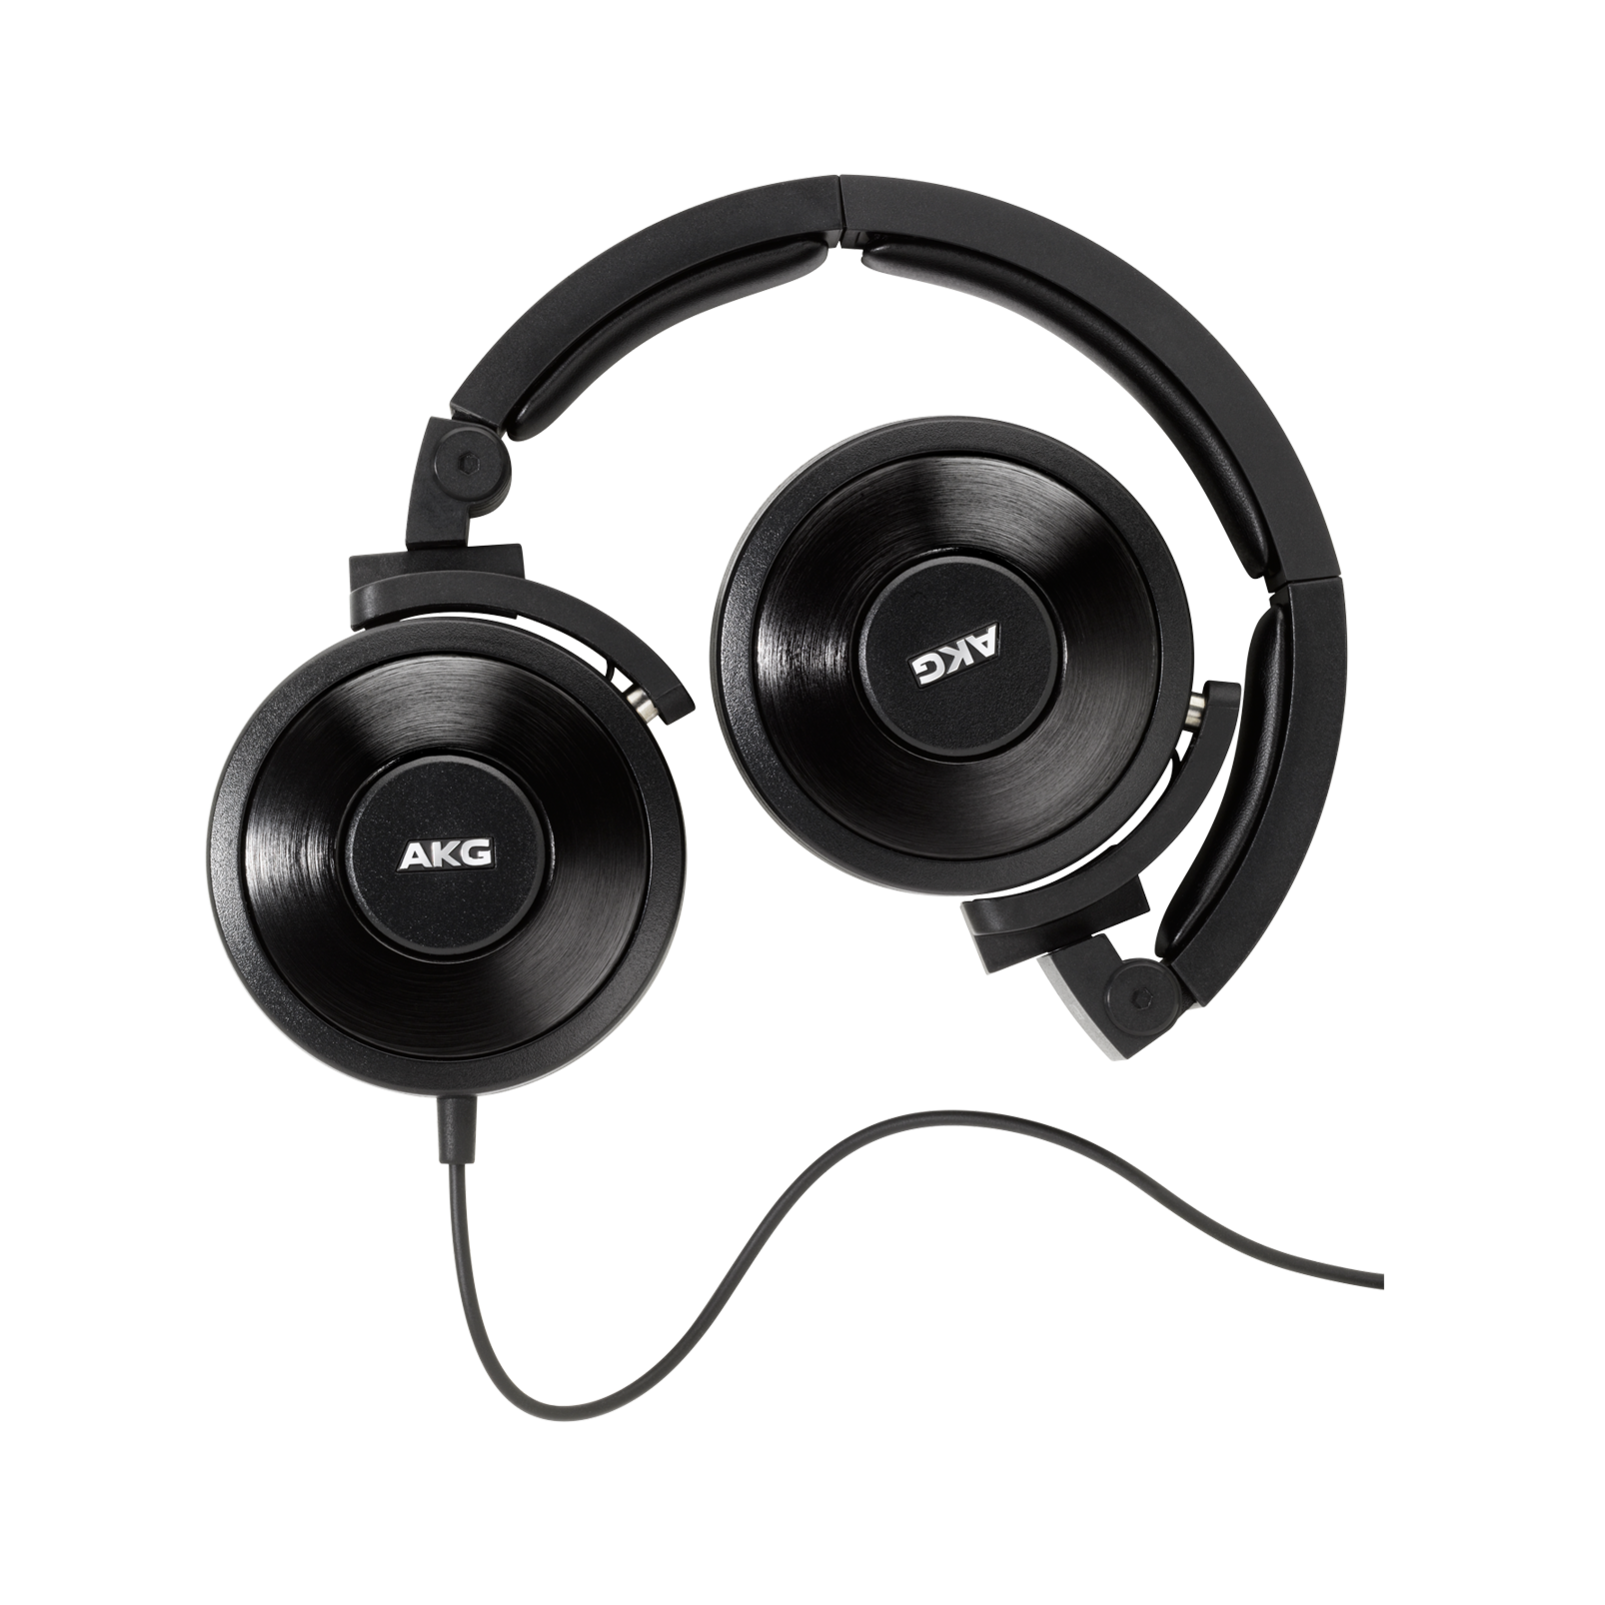 K 618 - Black - High-performance DJ headphones. - Detailshot 1